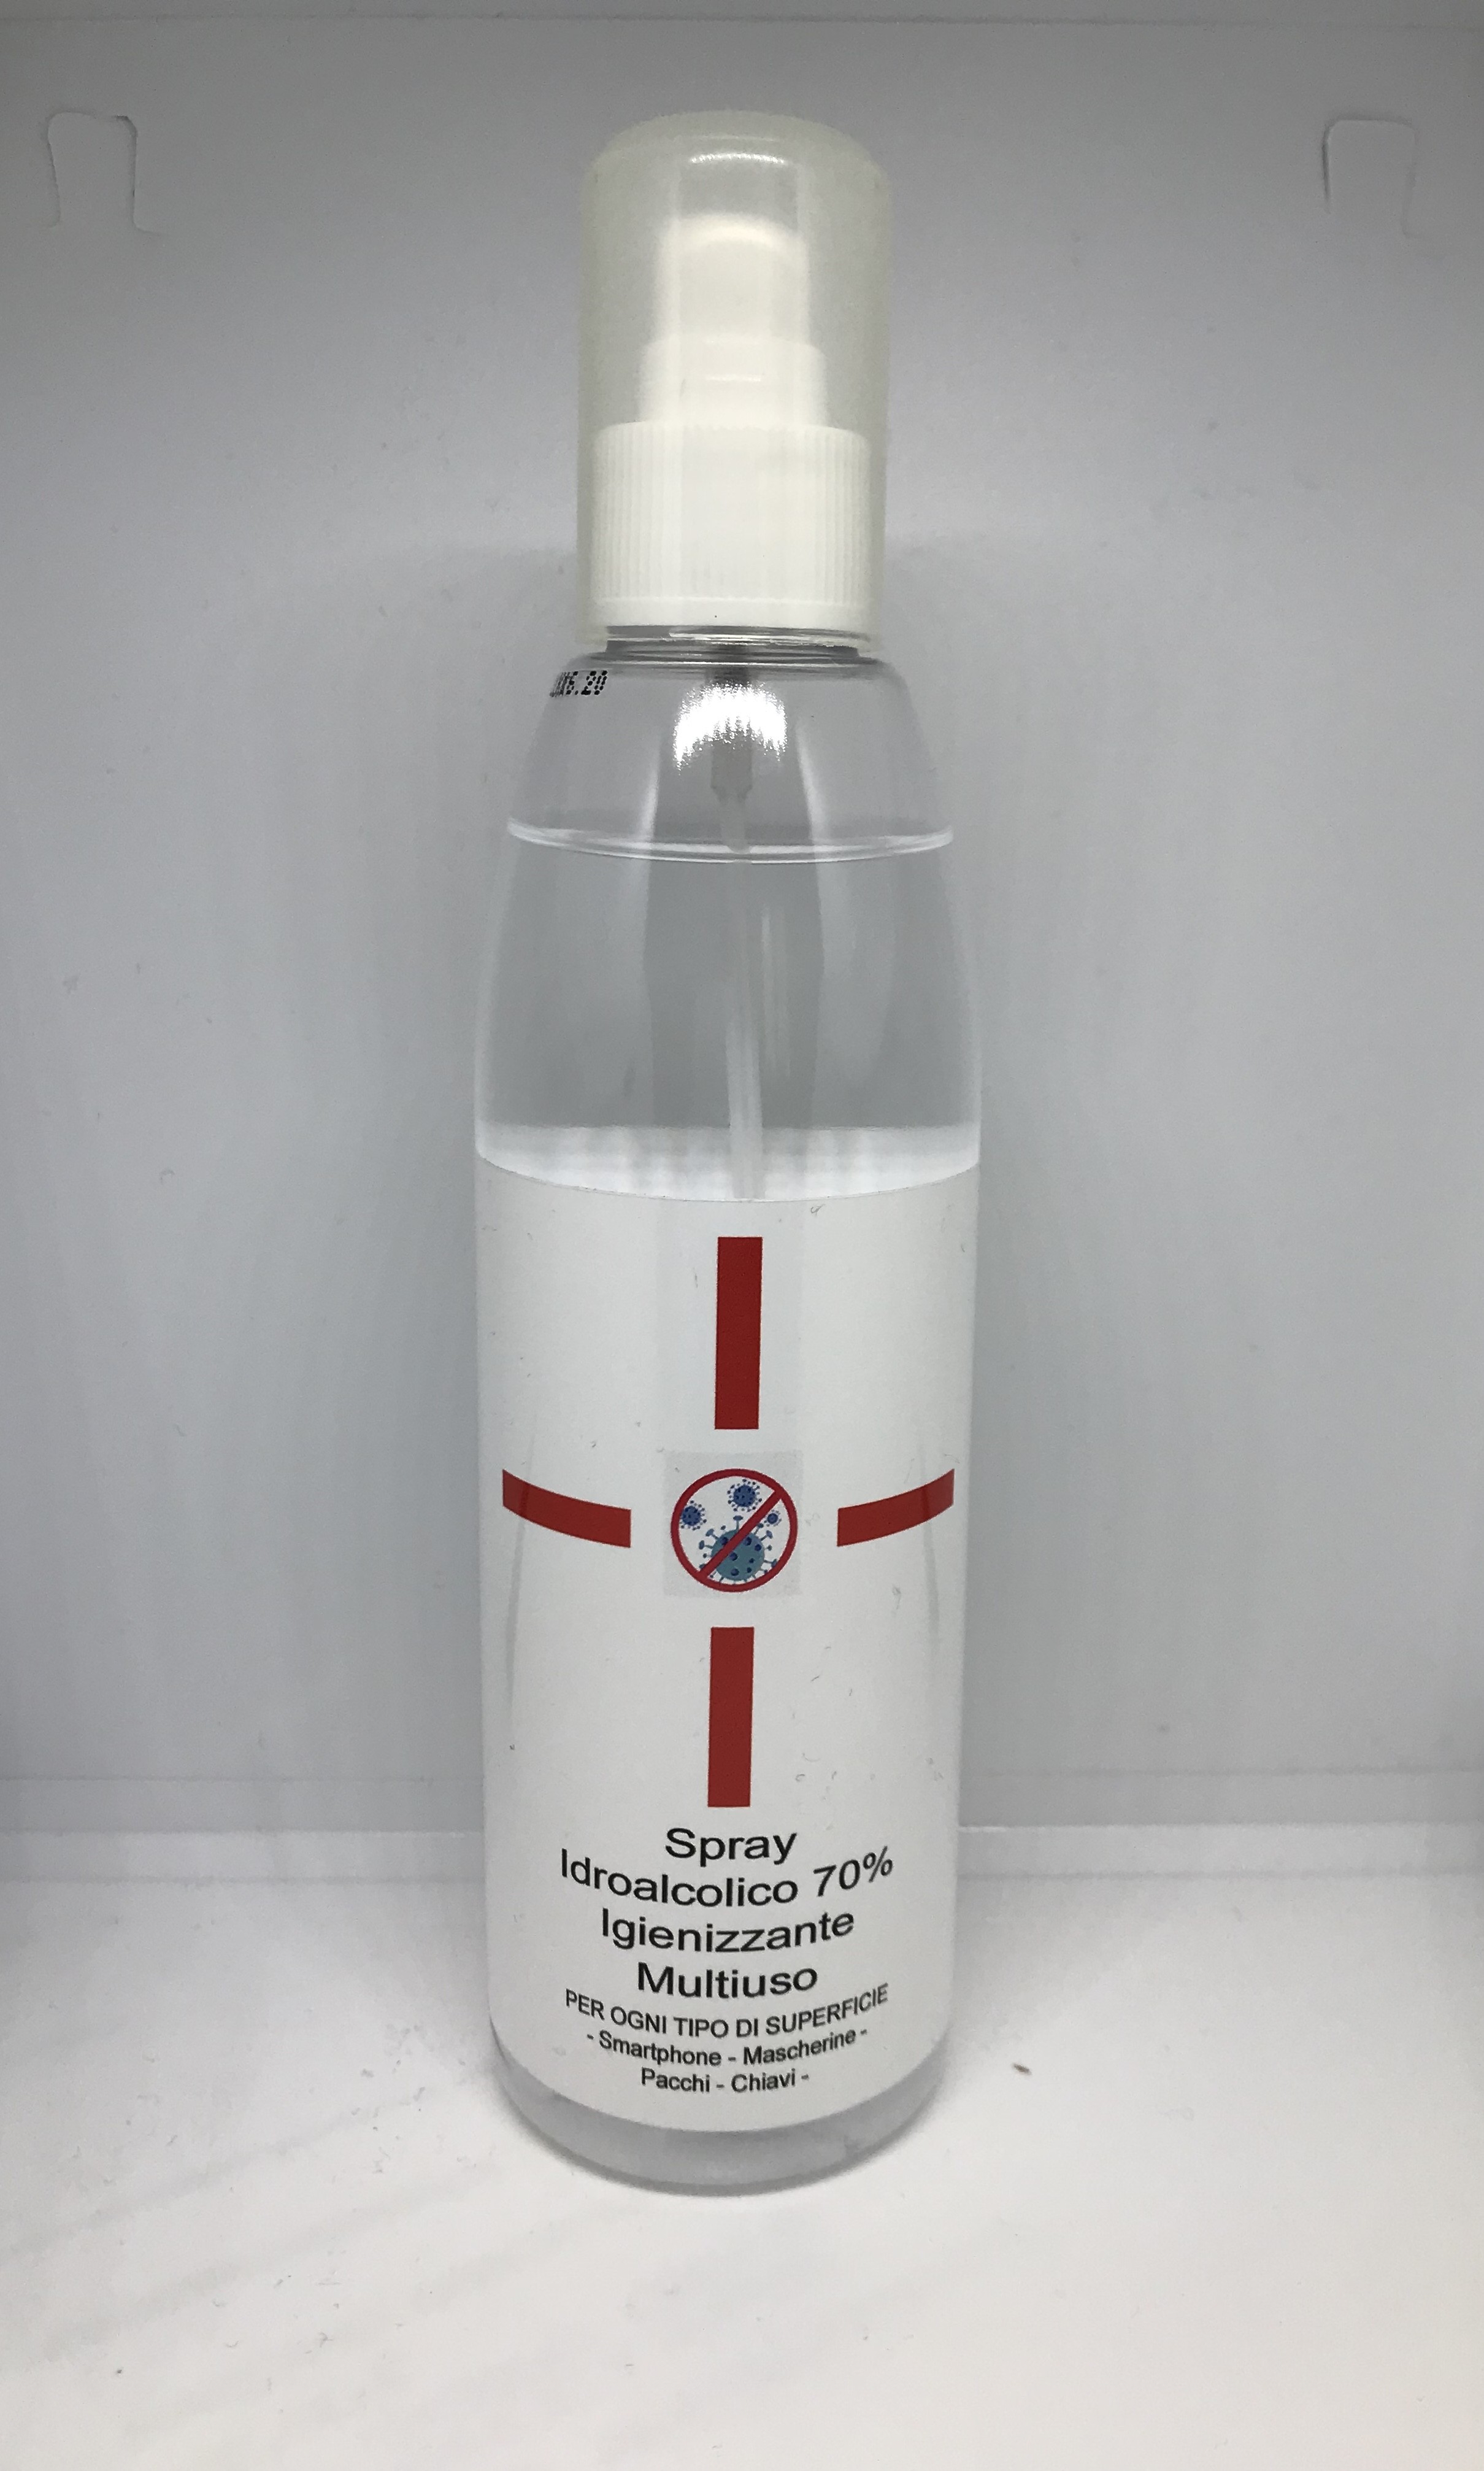 Komis Spray Igienizzante per Mascherina Mani e Superfici 250ml